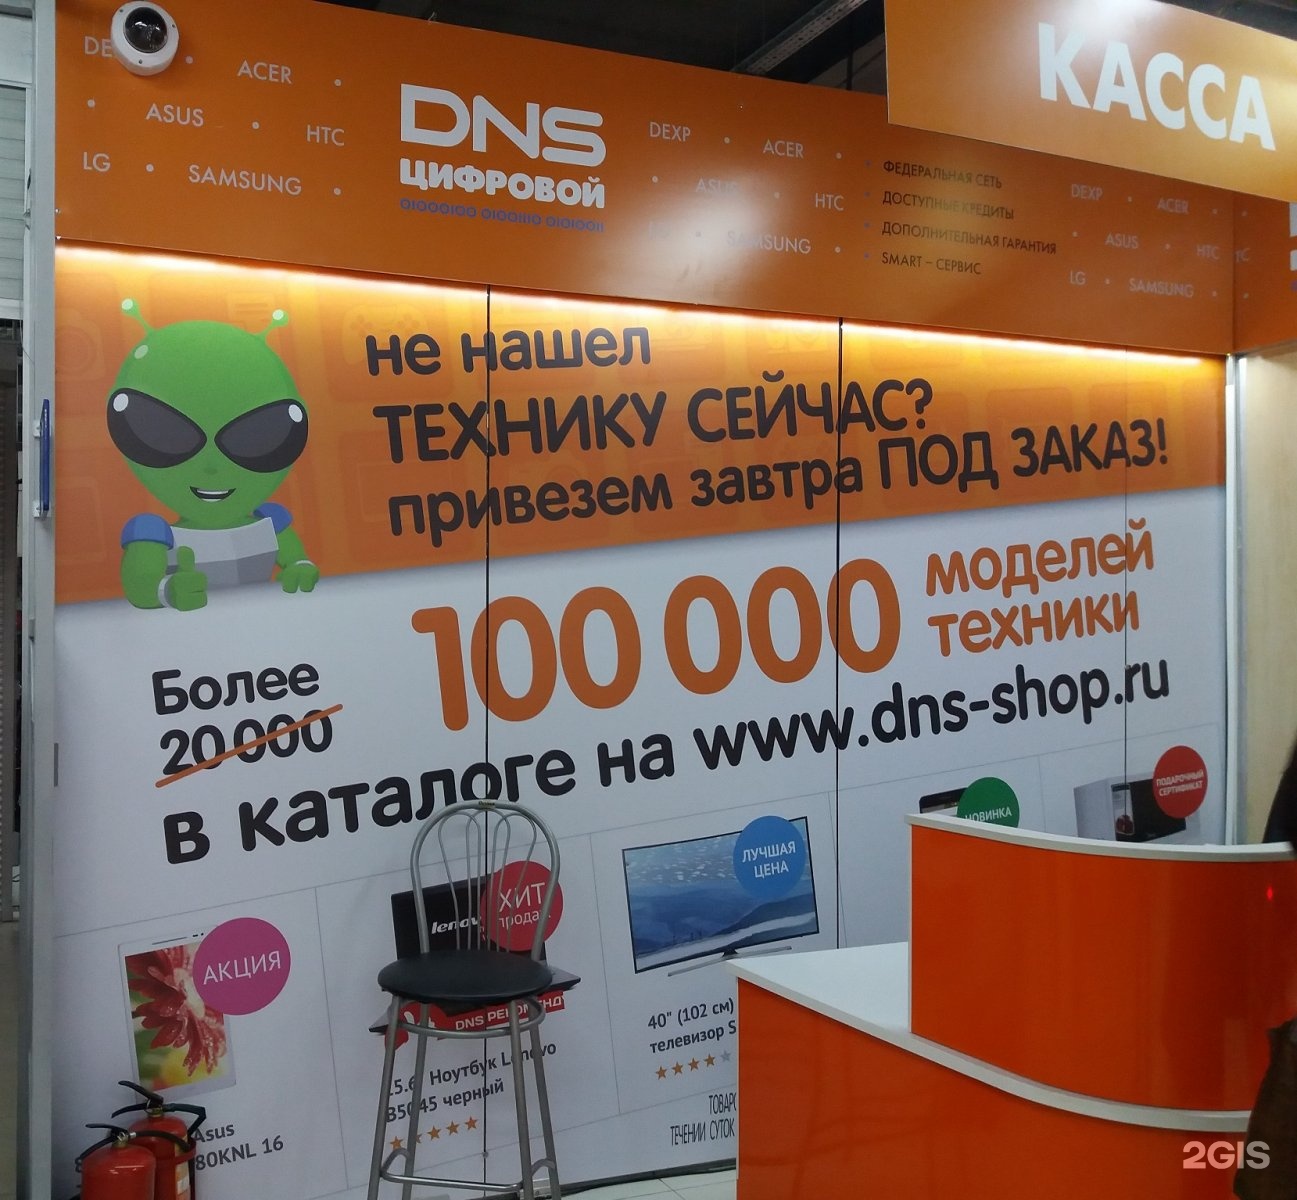 DNS Samsung. Самсунг ДНС. Сэм ДНС. Самсунг ДНС Серов.